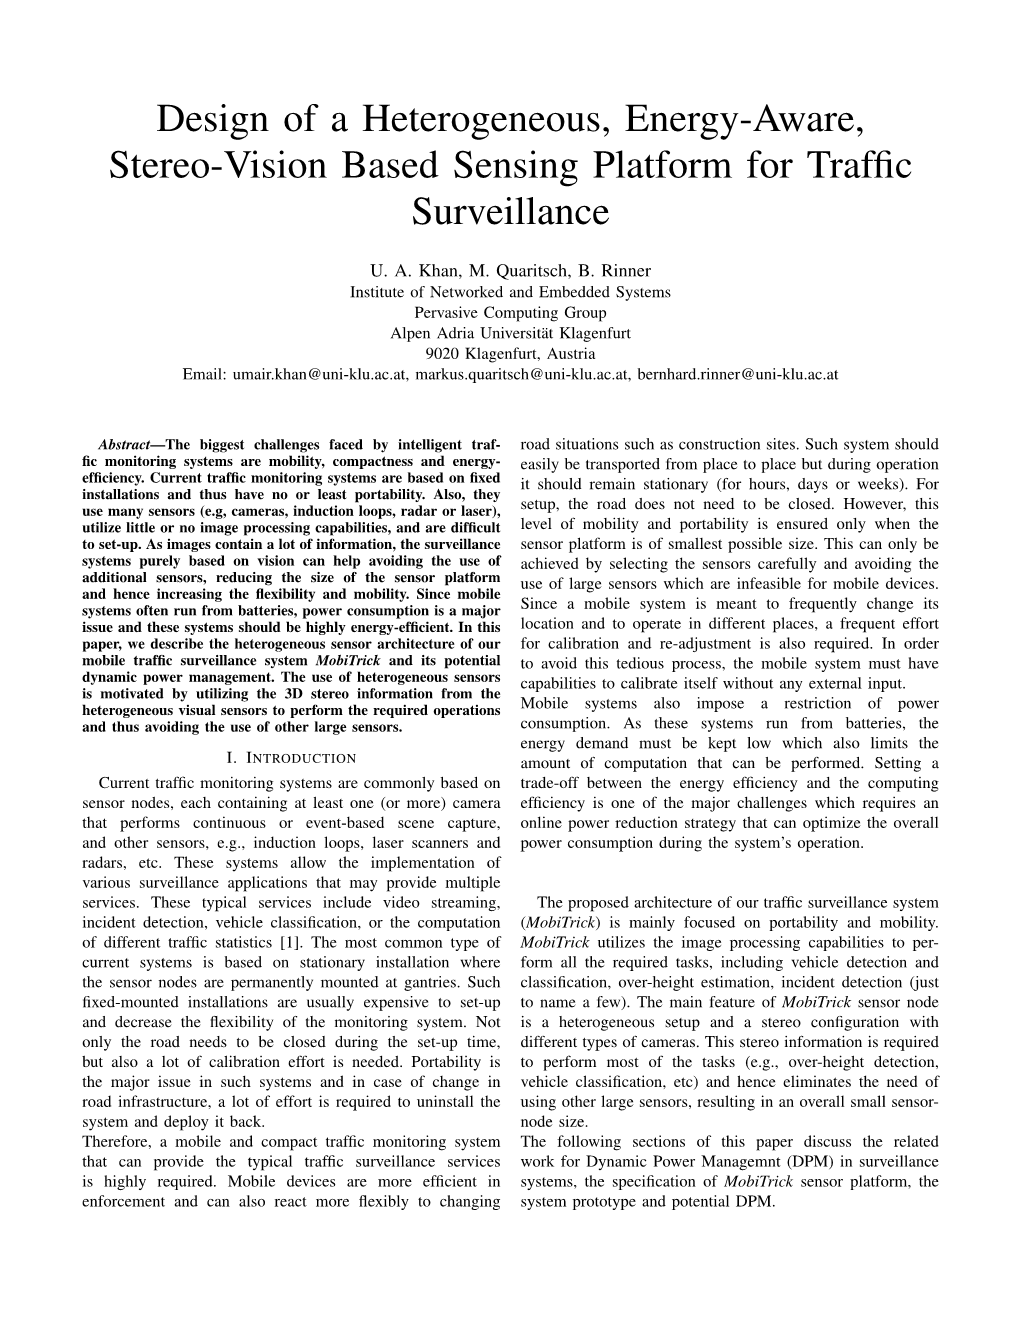 Design of a Heterogeneous, Energy-Aware, Stereo-Vision Based Sensing Platform for Trafﬁc Surveillance